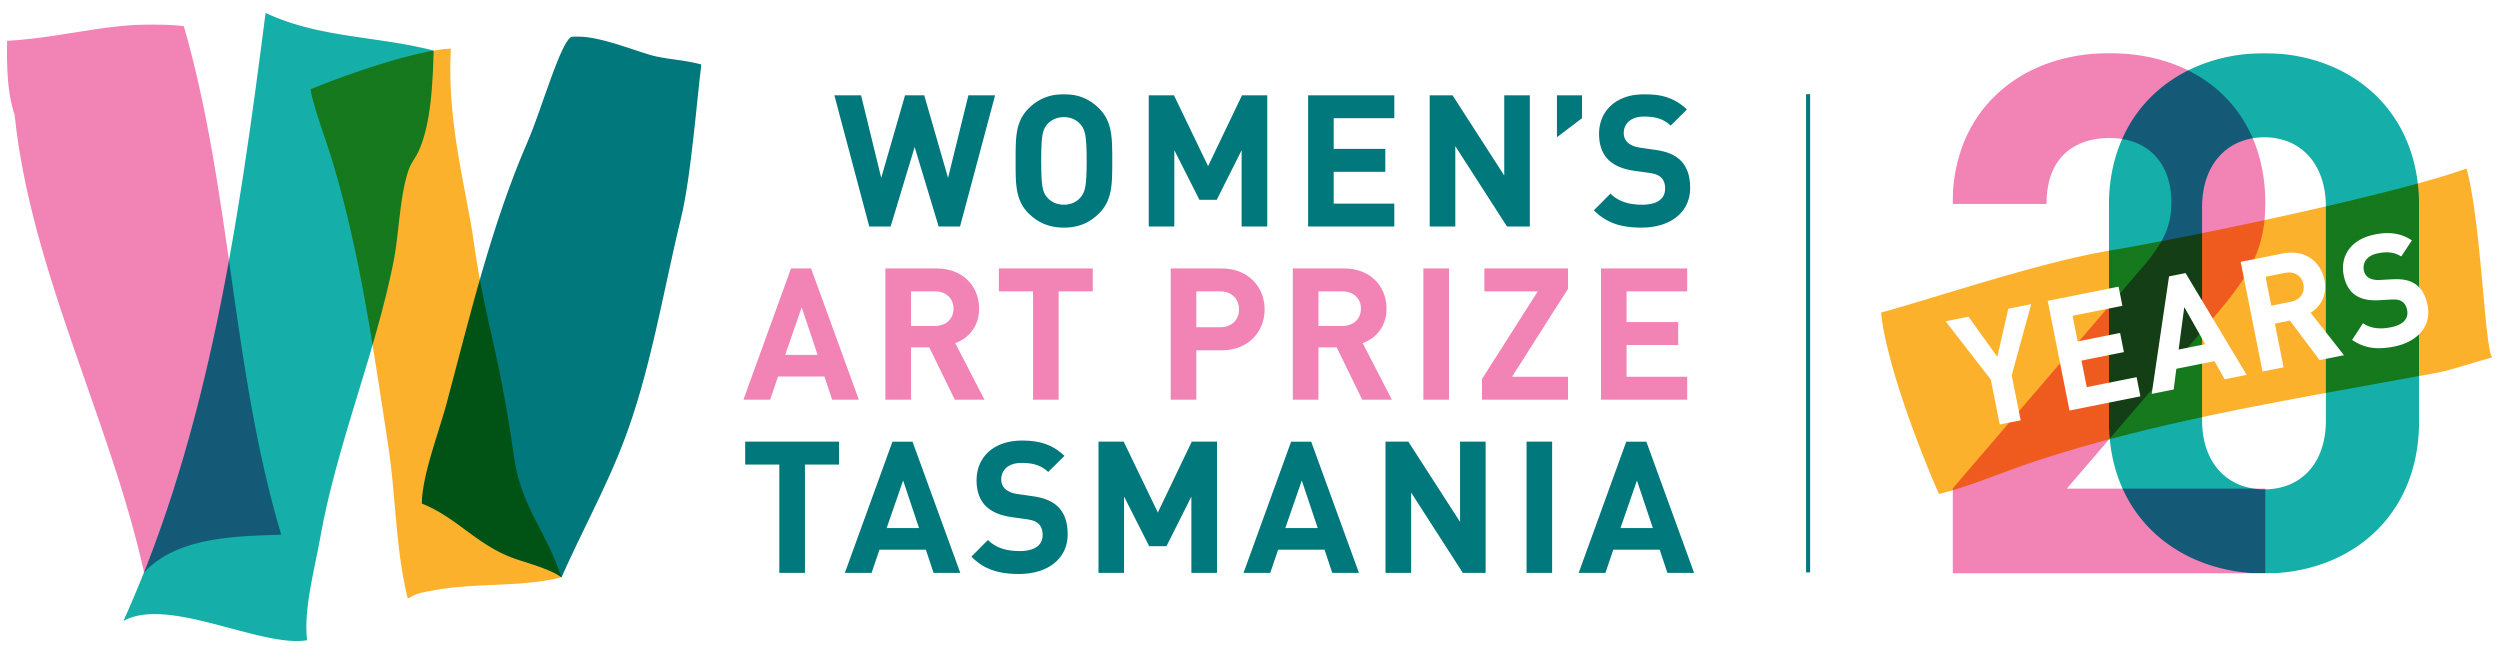 Womens Art Prize Tasmania 20 Years Logo.jpg